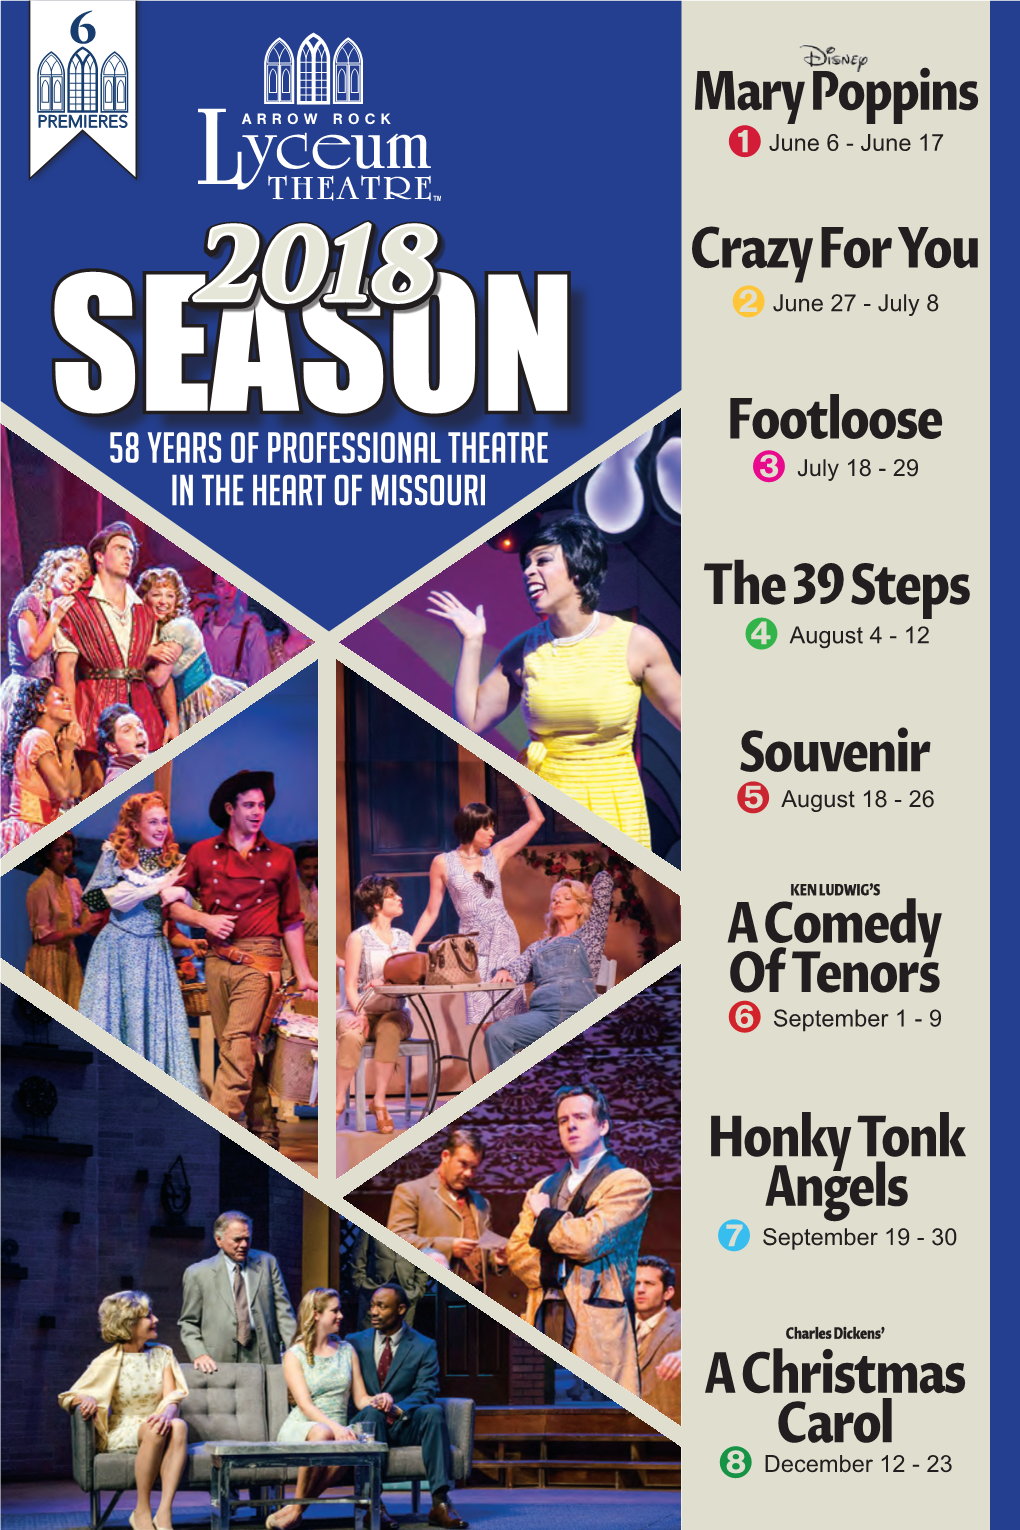 Arrow Rock Lyceum Theatre 2018 Season Brochure